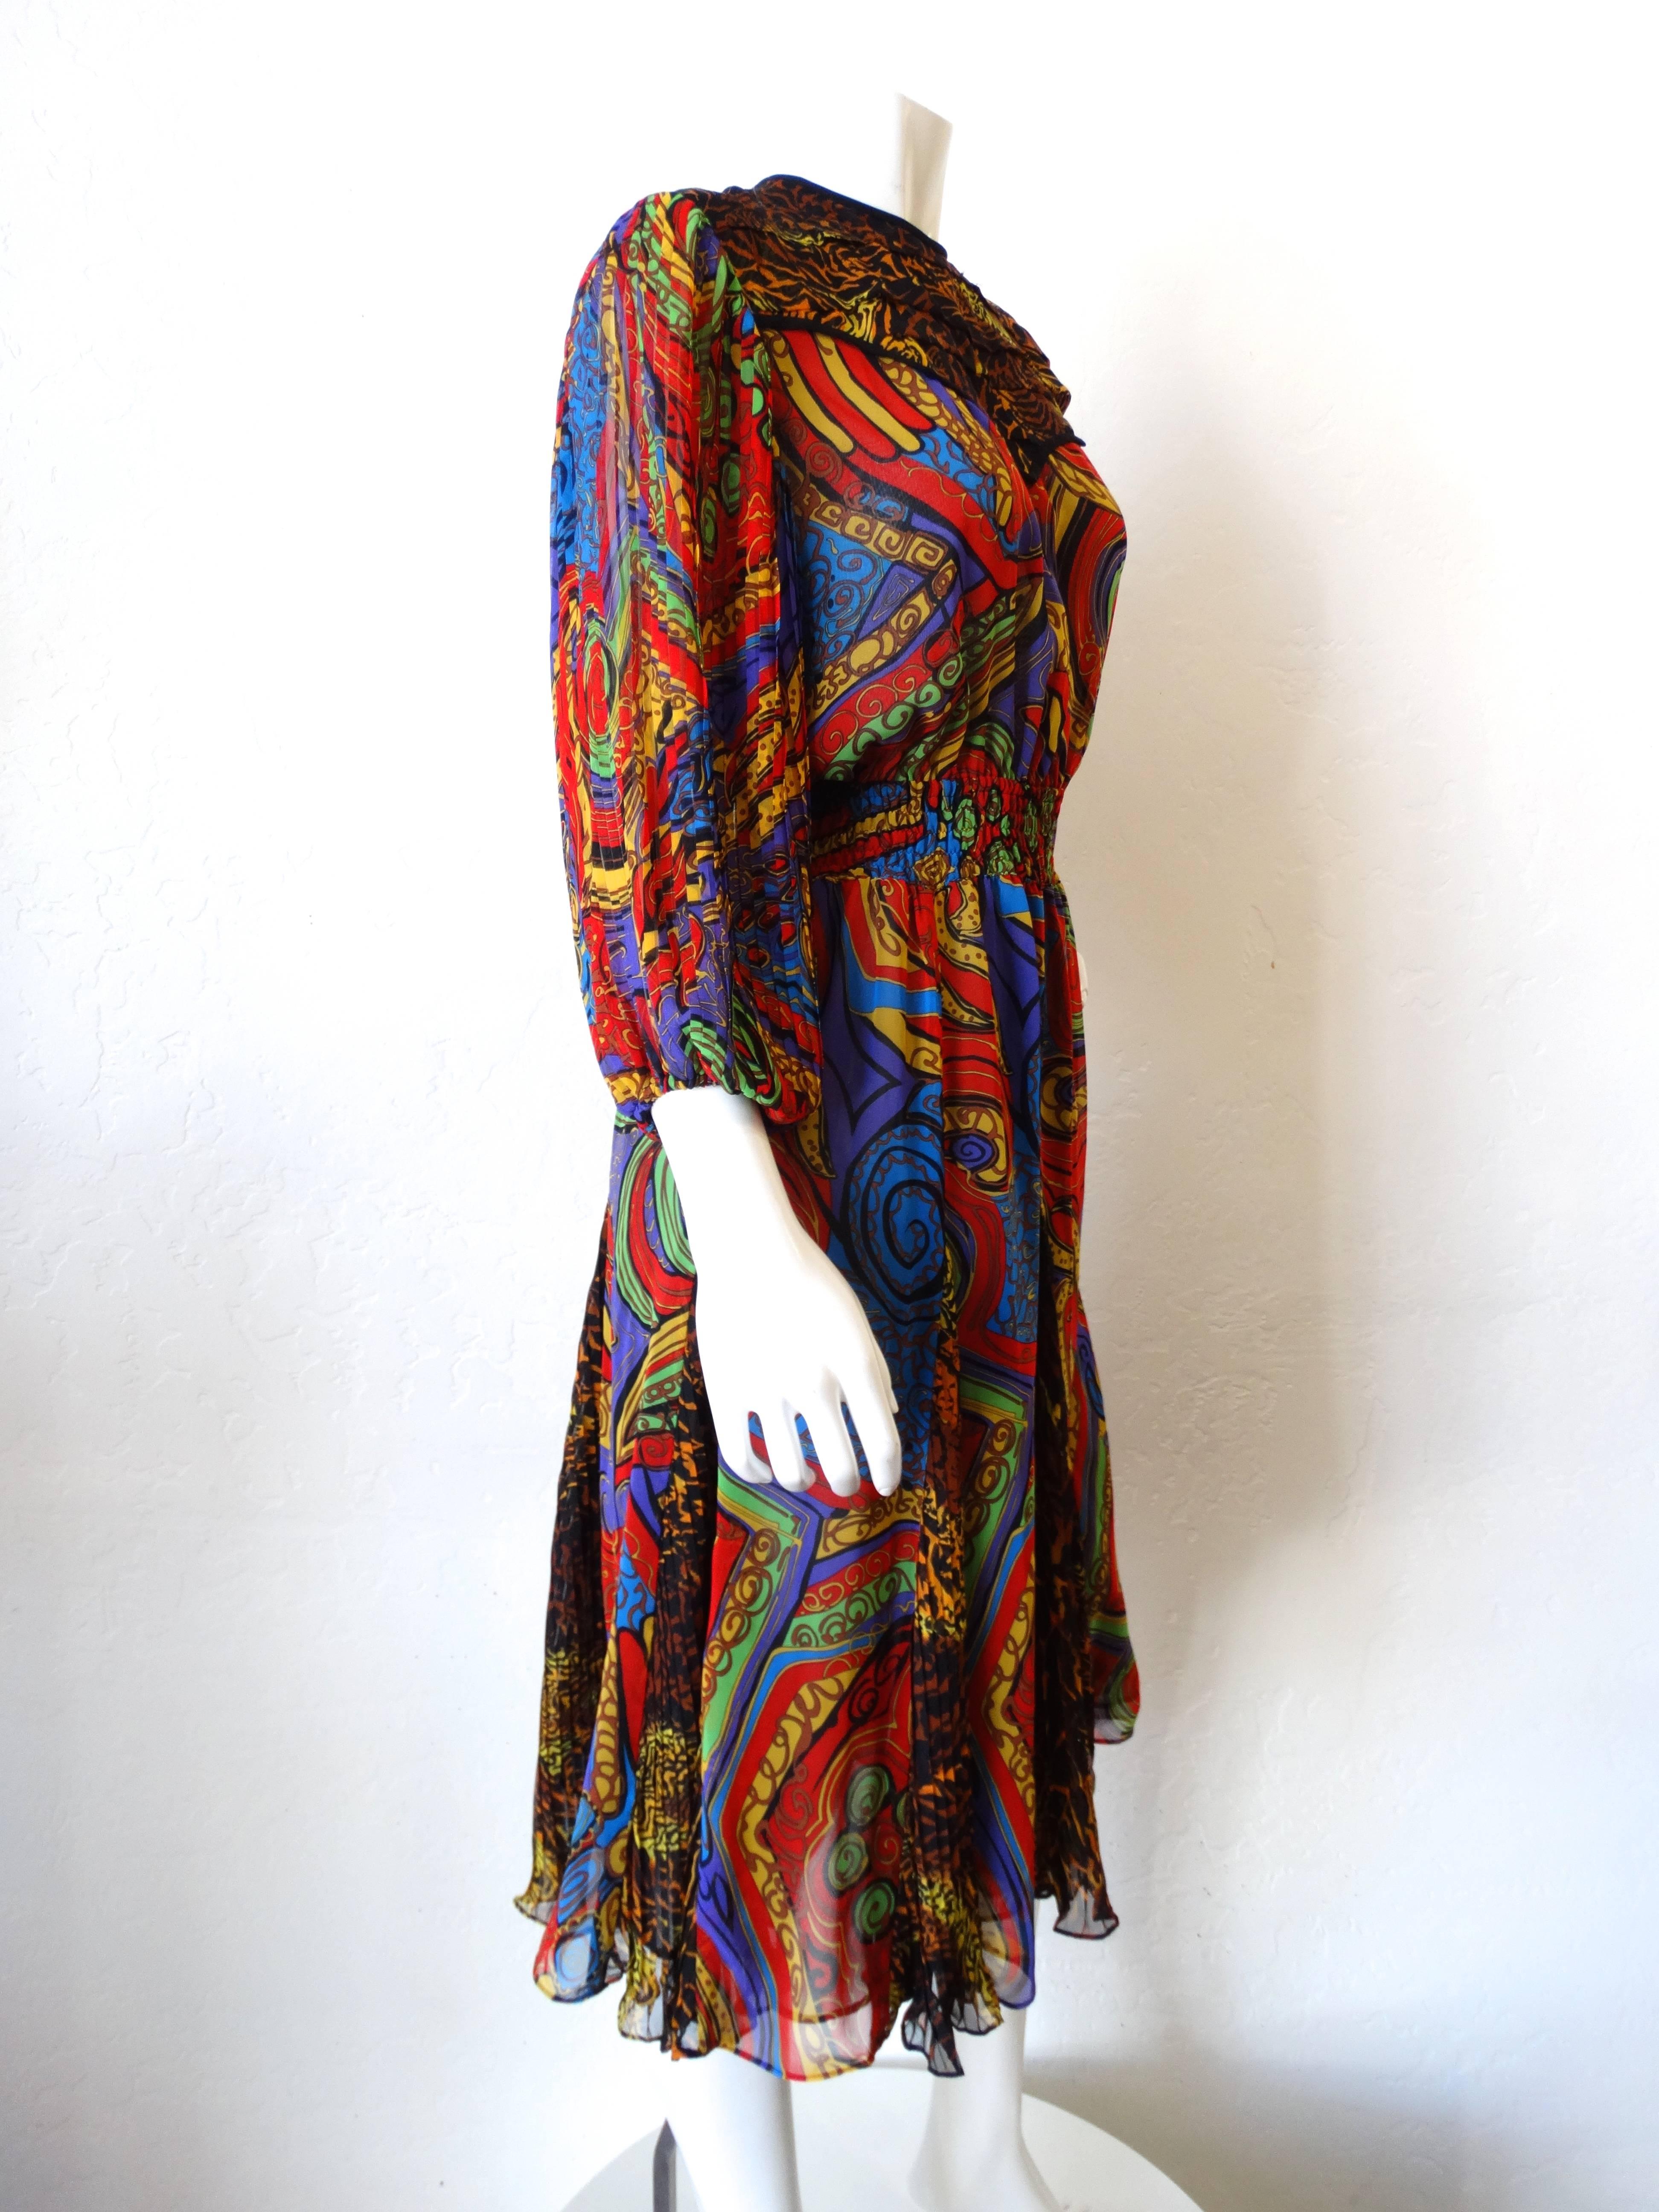 Brown Diane Freis Leopard Swirl Printed Dress, 1980s